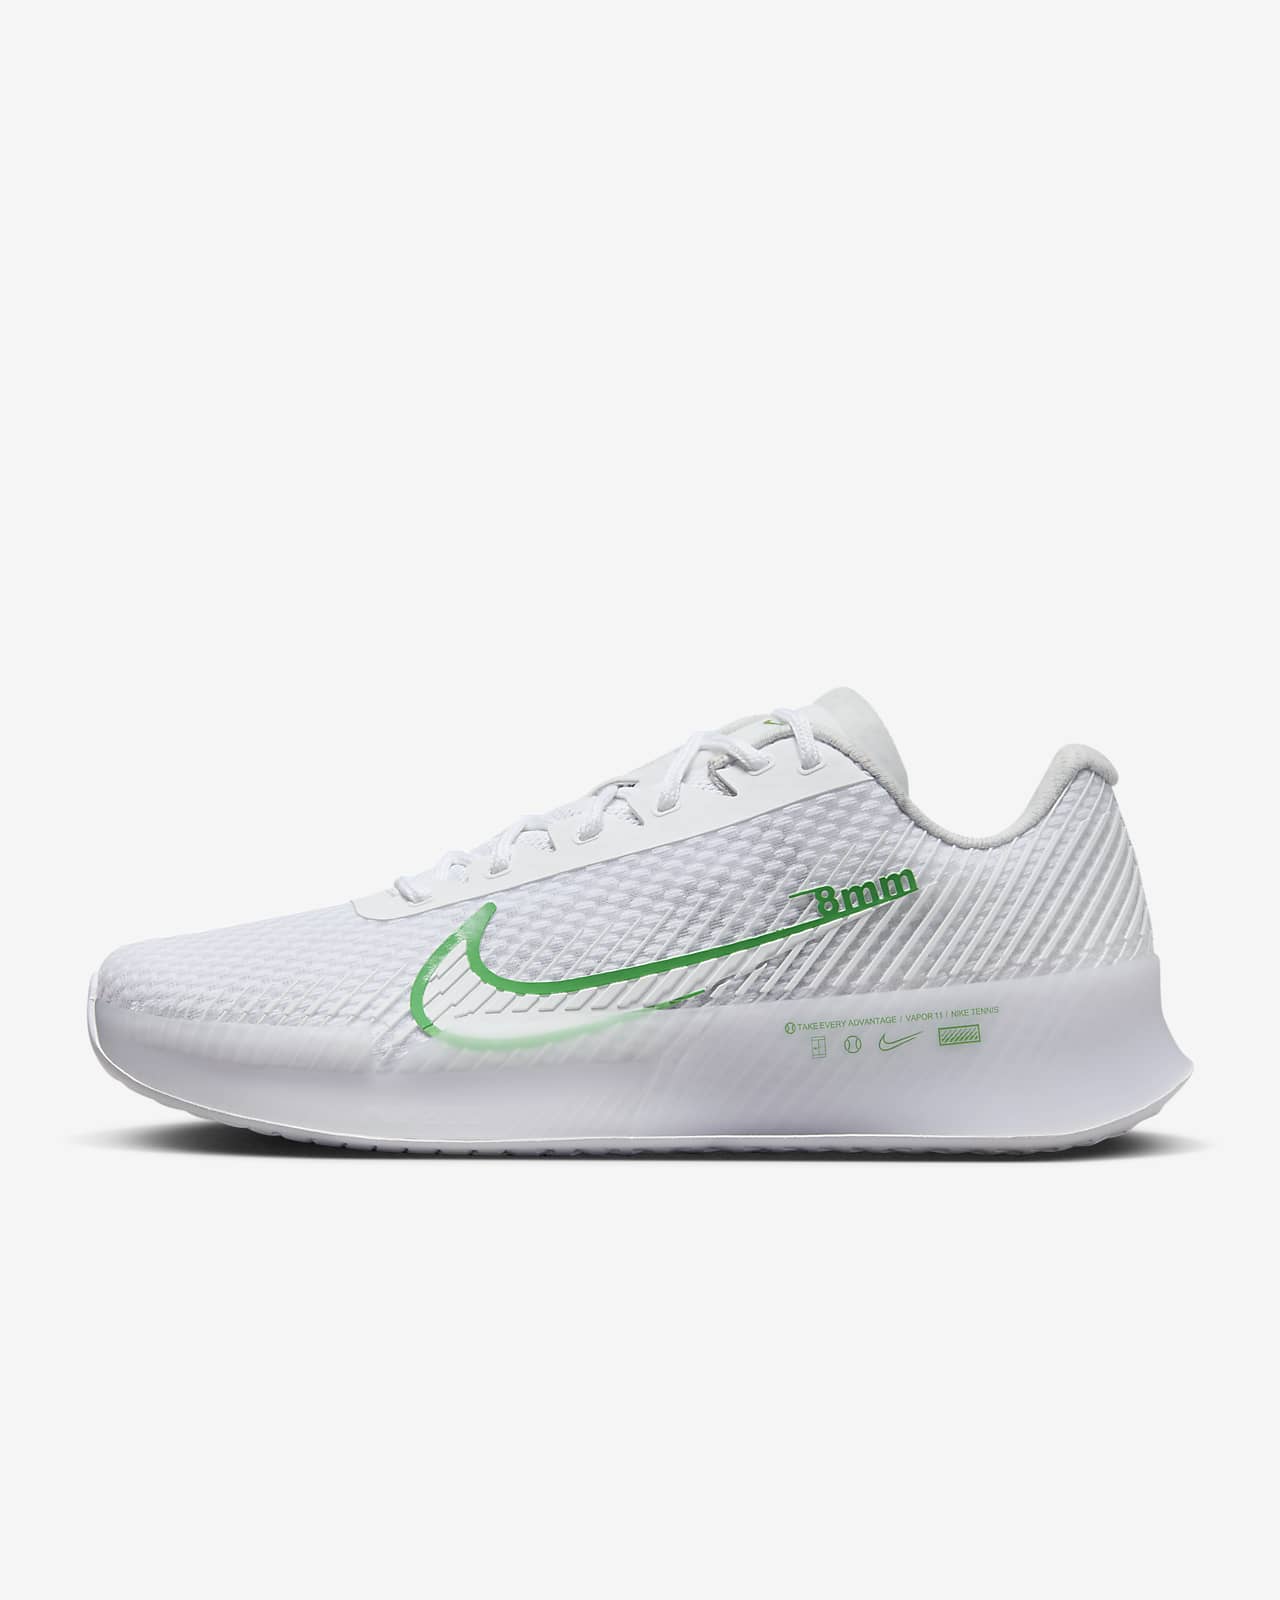 NikeCourt Air Vapor 11 Men's Court Tennis Shoes. LU